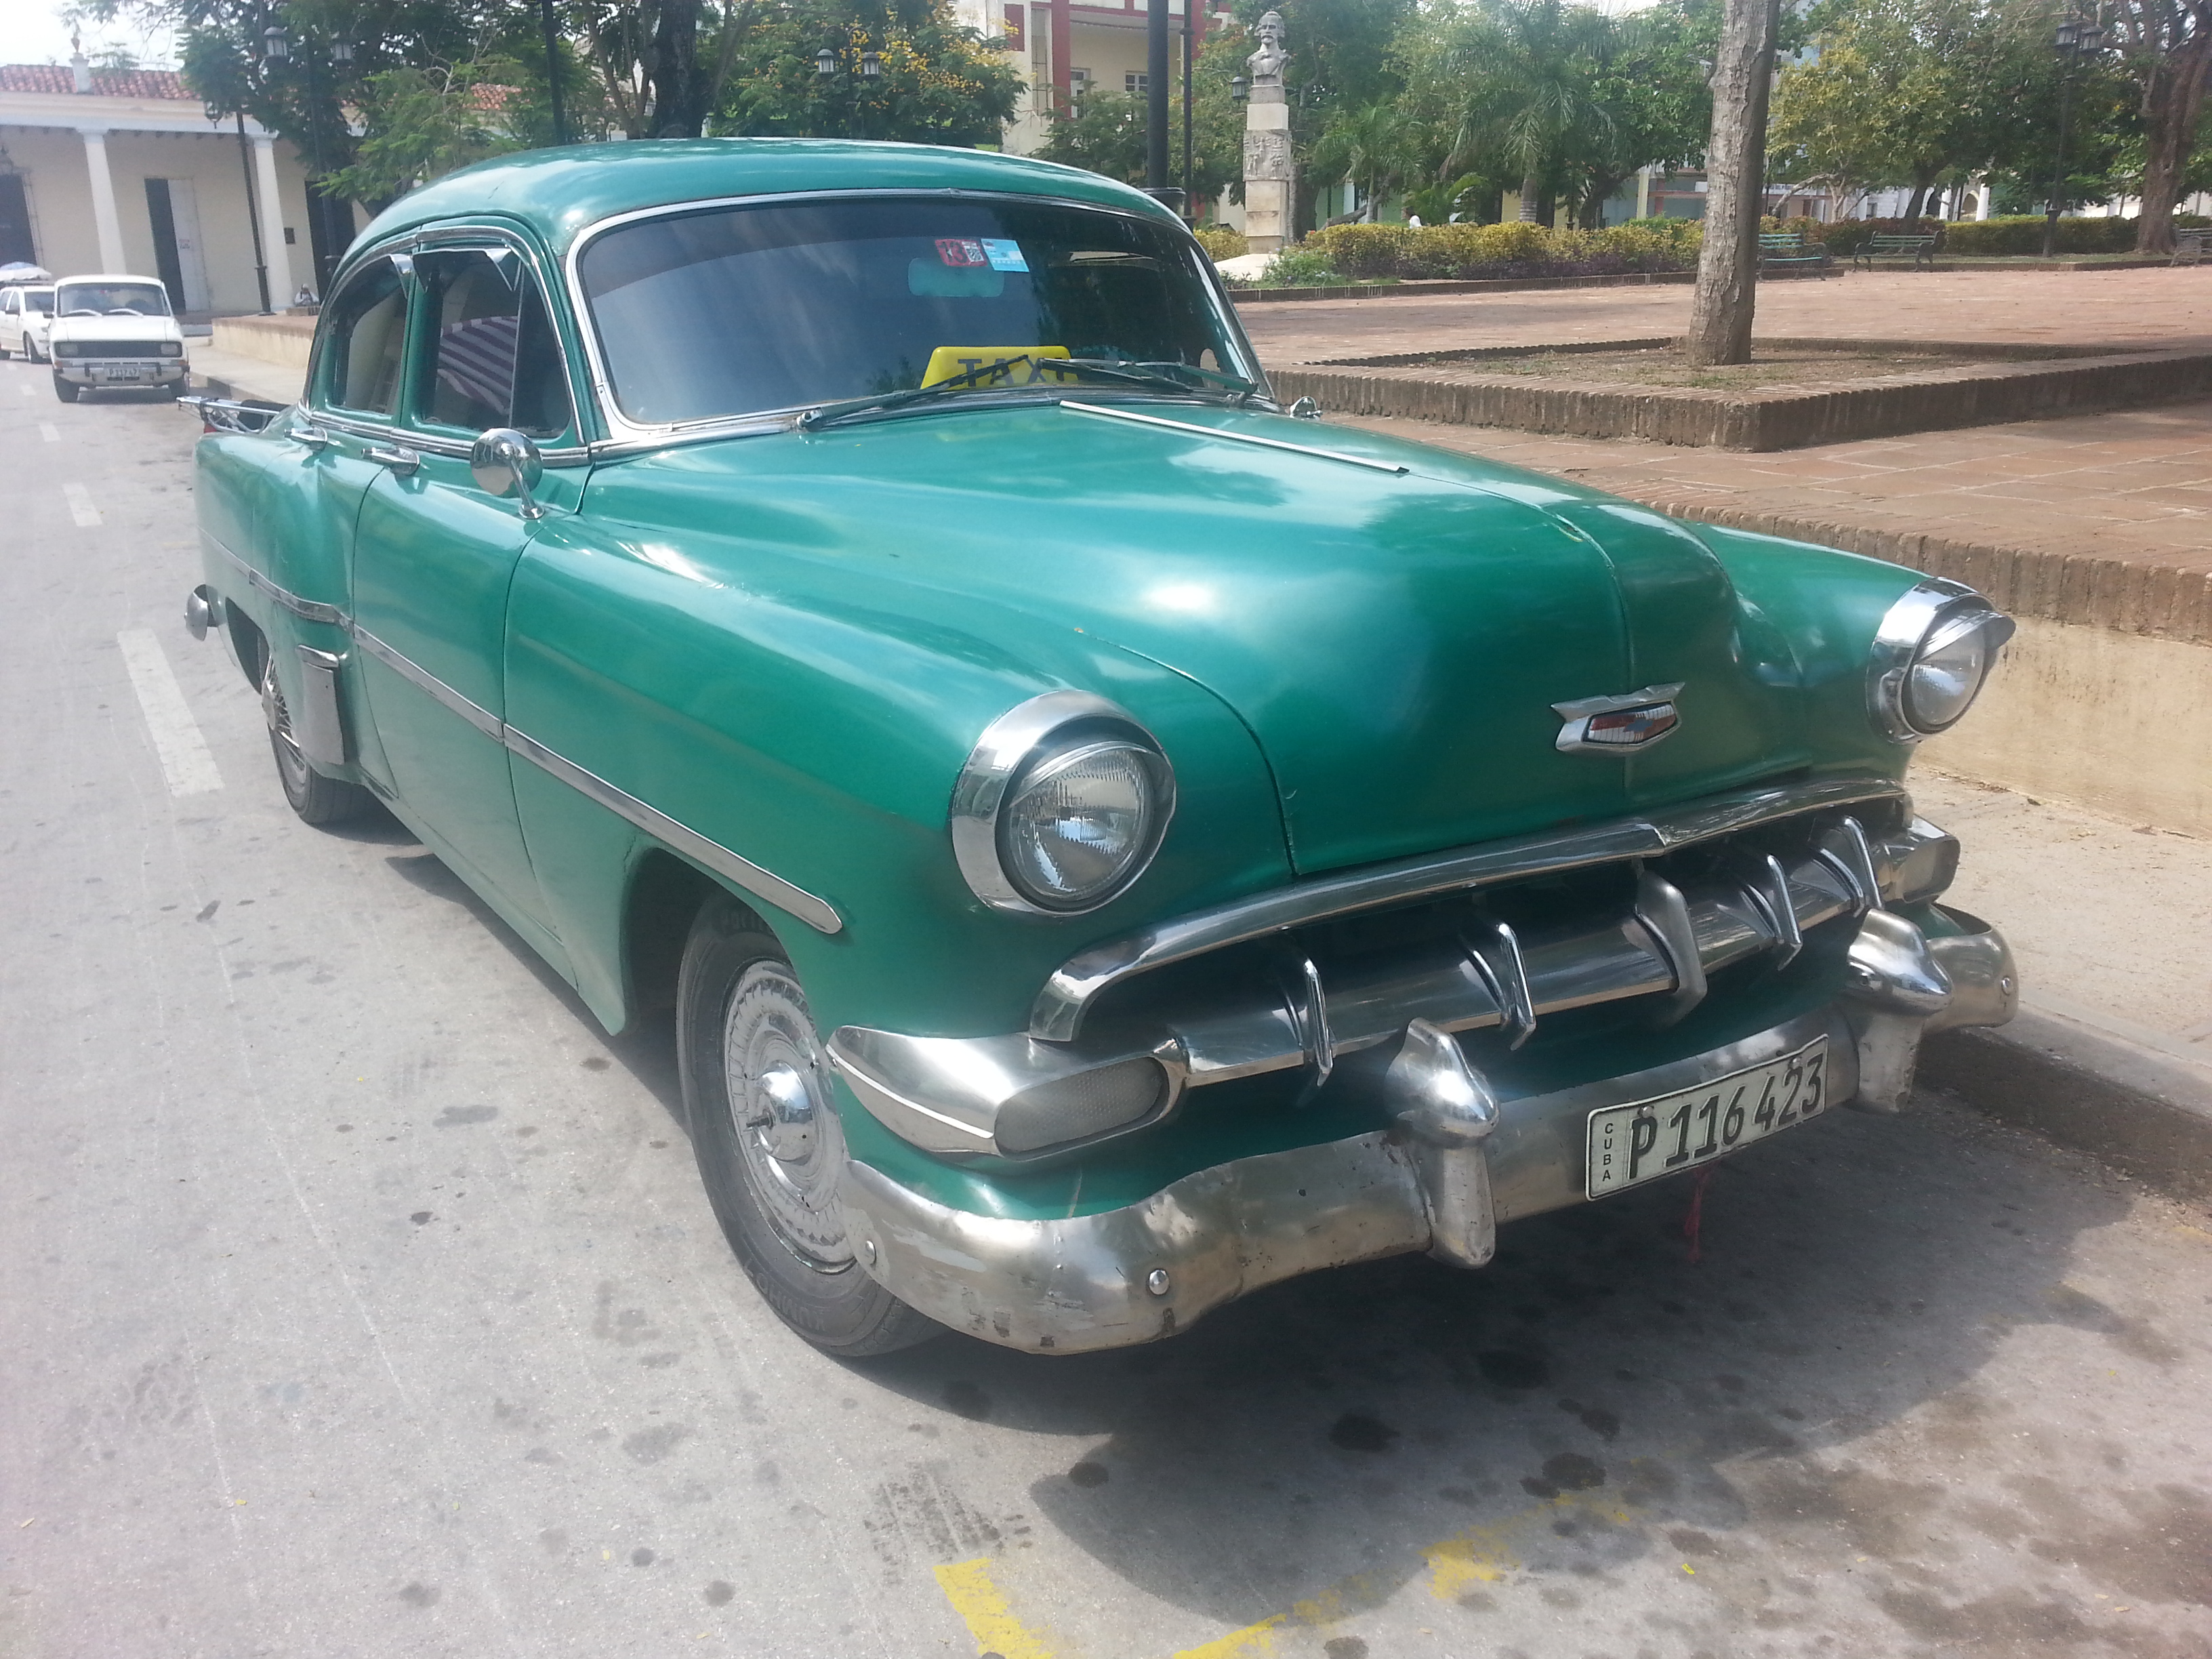 Julio, s Oldtimer Taxi Bj. 1954